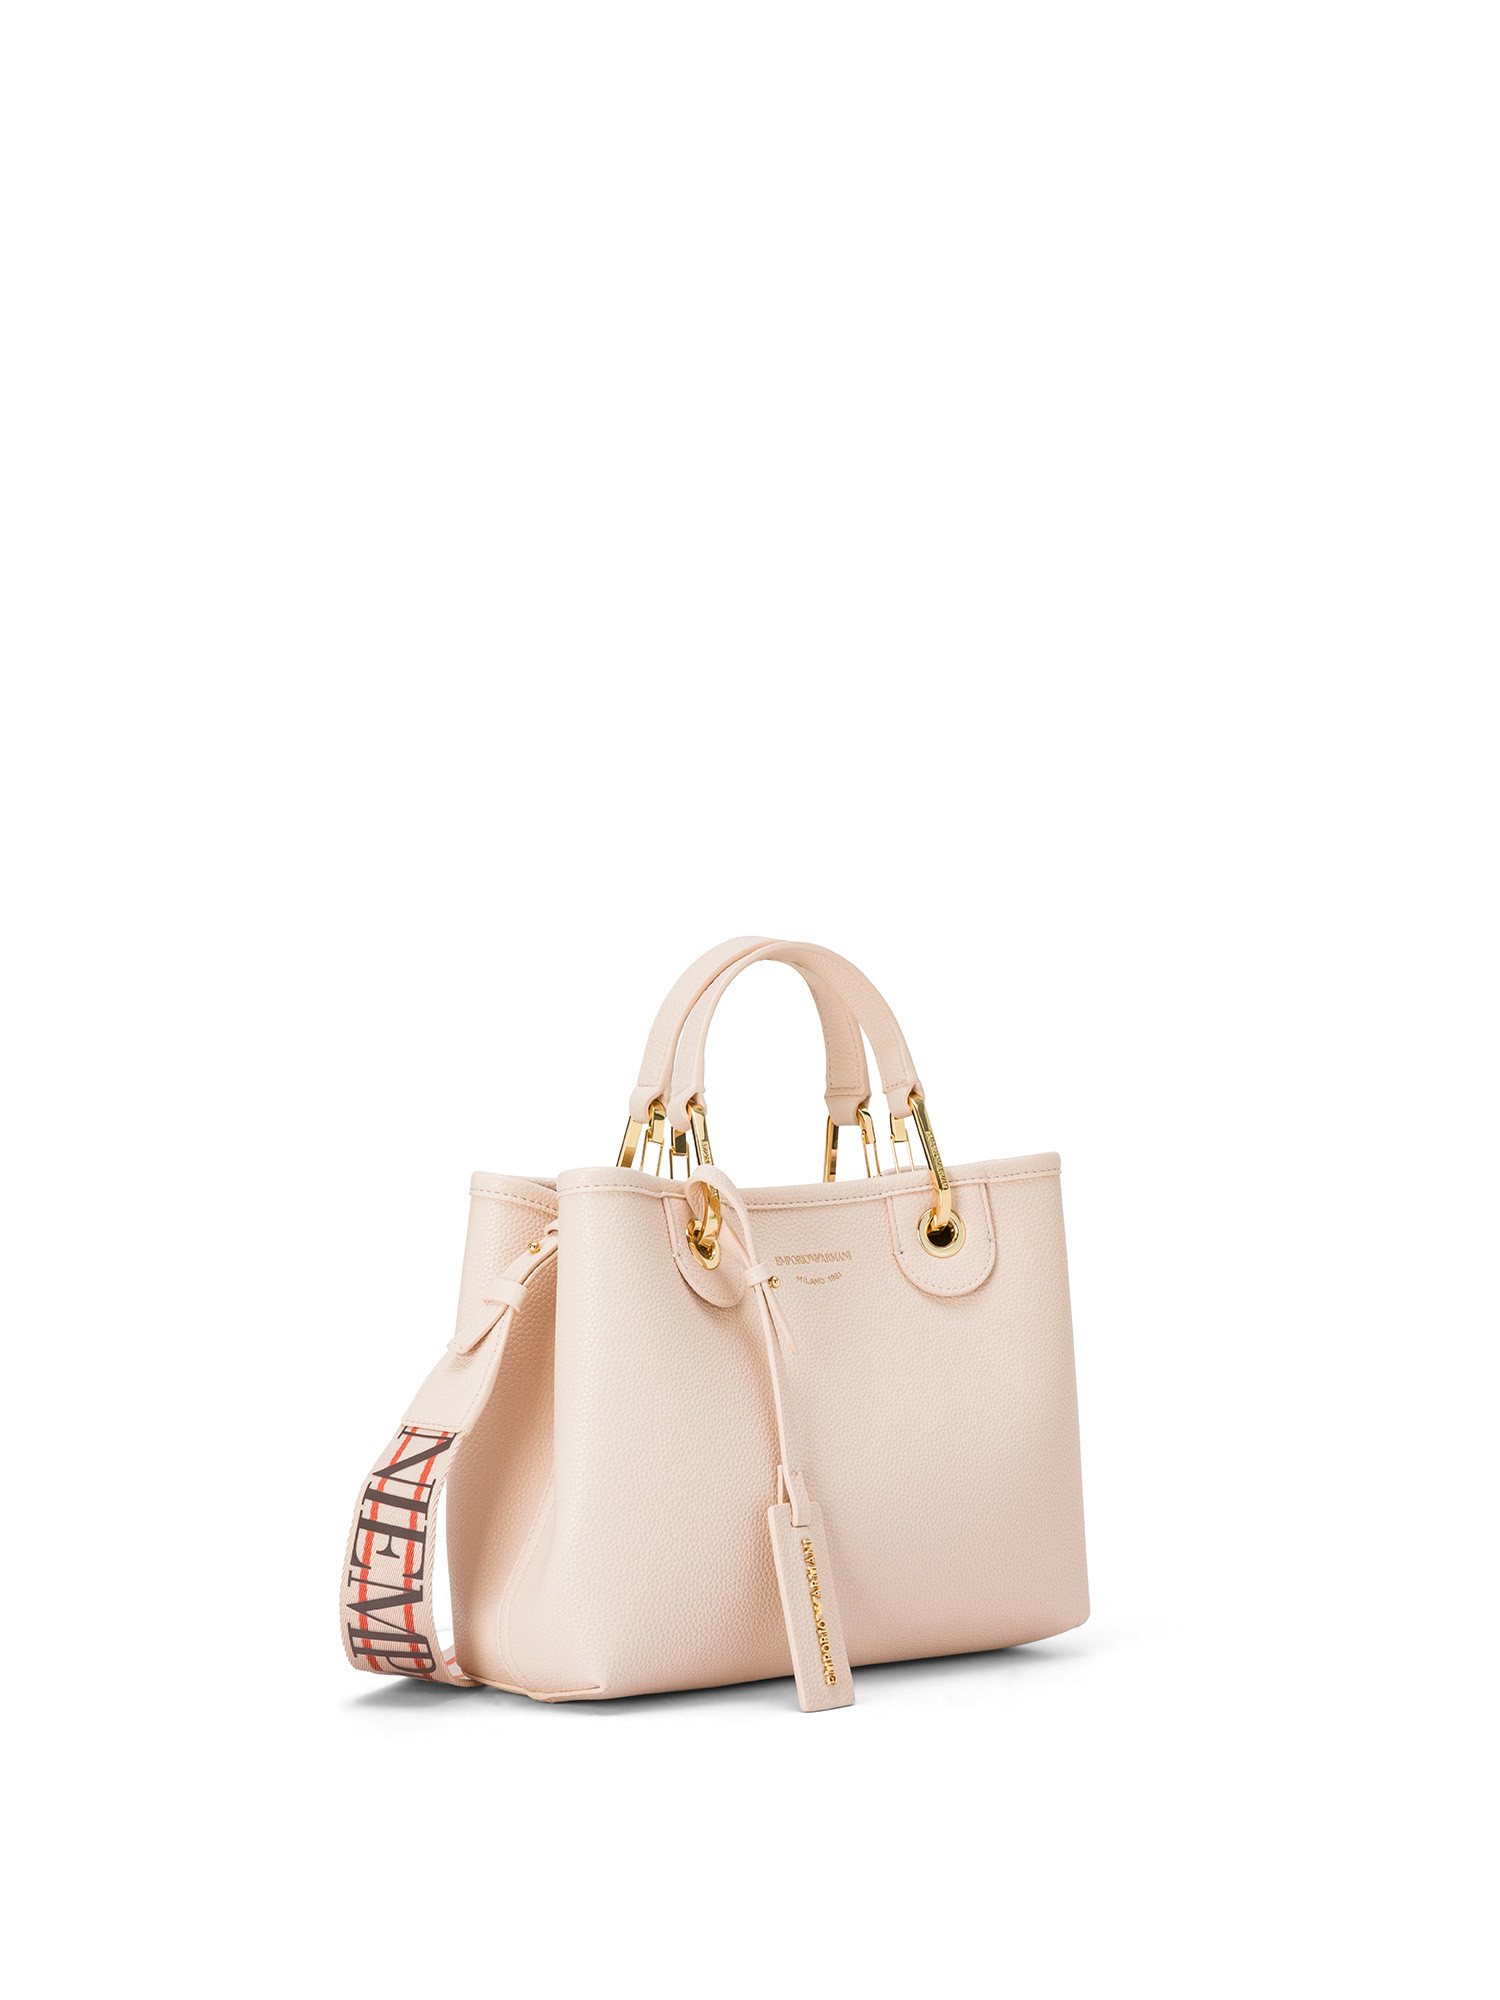 Emporio Armani - Small handbag with deer print, Powder Pink, large image number 1